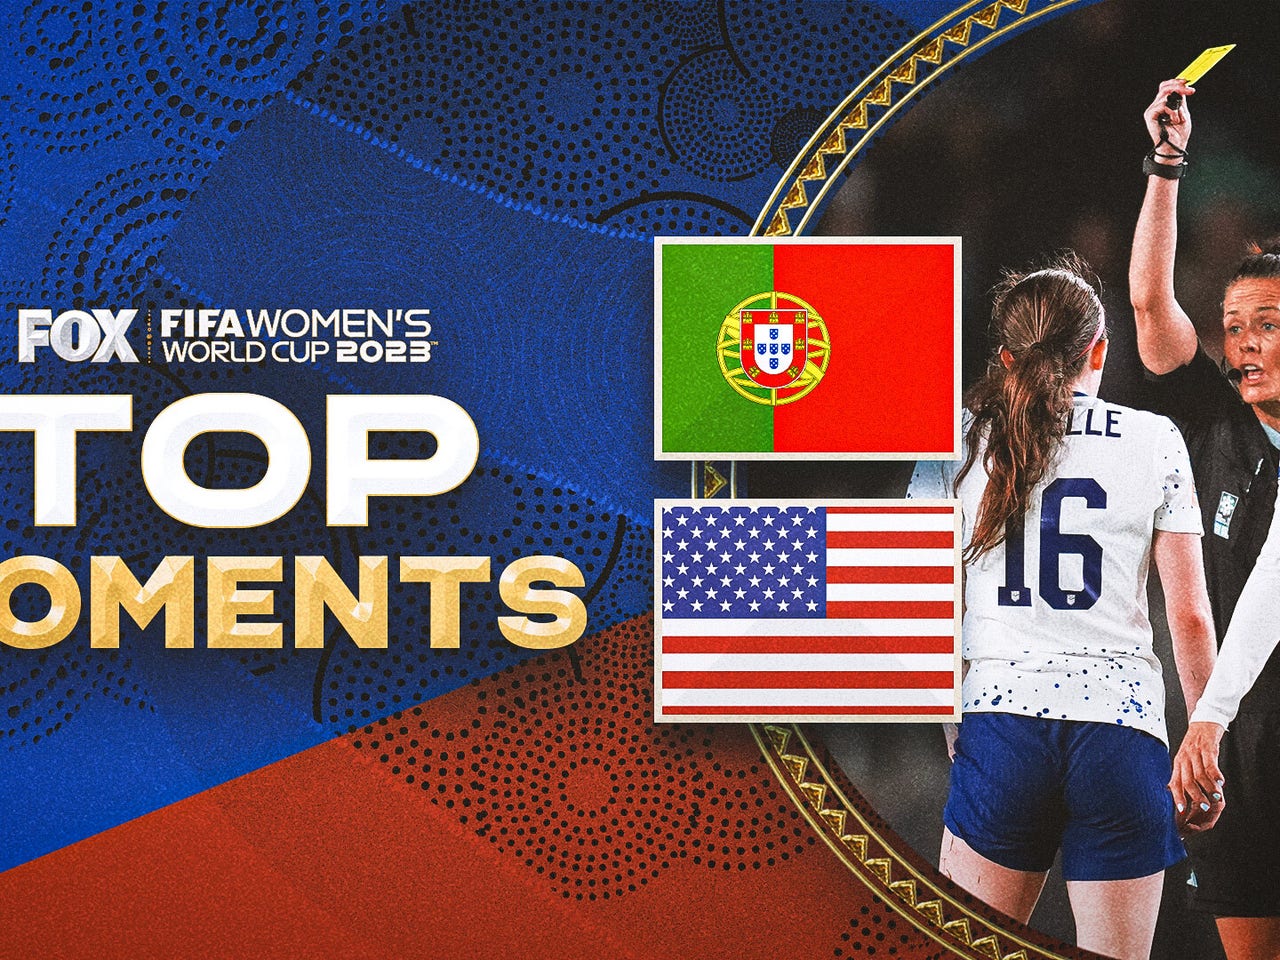 U.S. Girls U19 Open 2023 World Championships With Five-Set Win Over Korea -  USA Volleyball